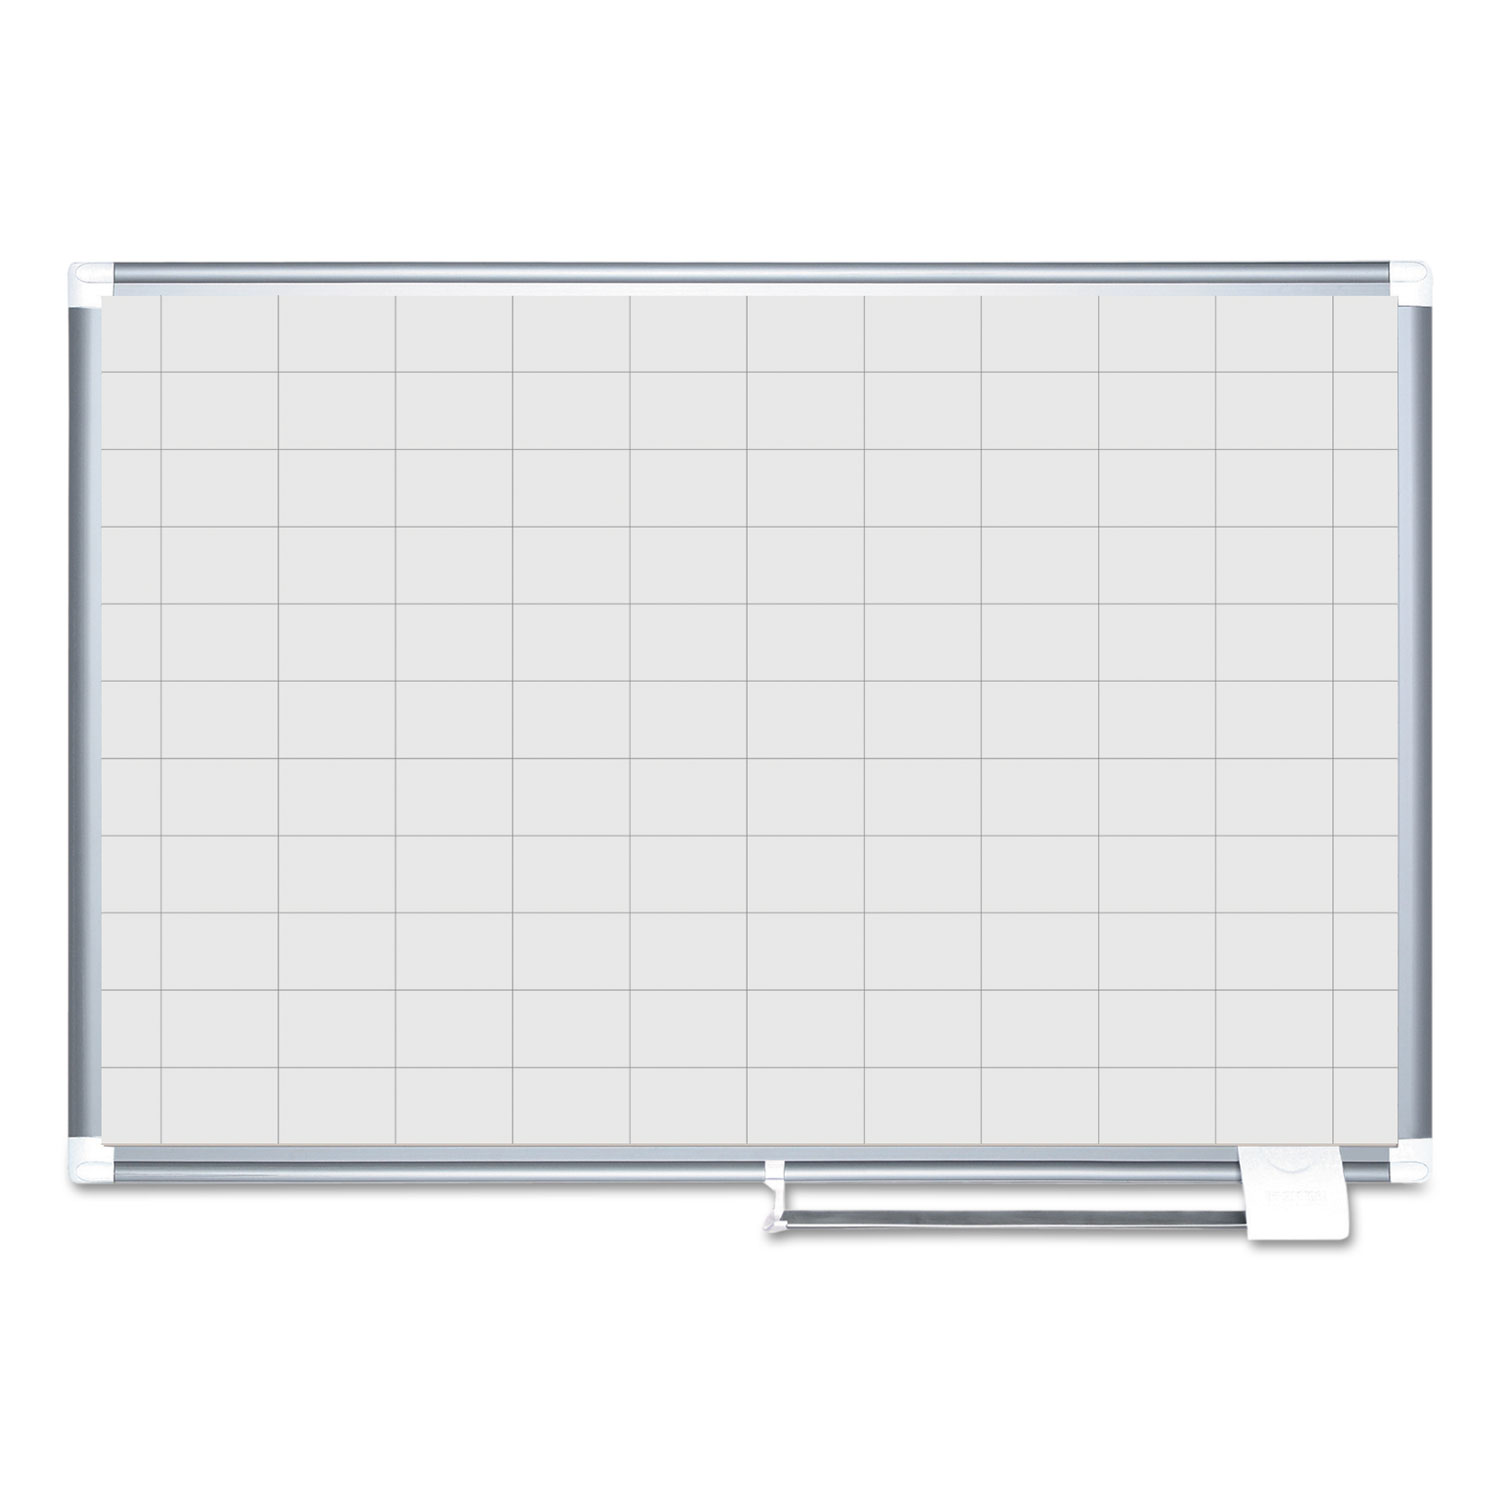  MasterVision MA0593830 Grid Planning Board, 48 x 36, 2 x 3 Grid, White/Silver (BVCMA0593830) 